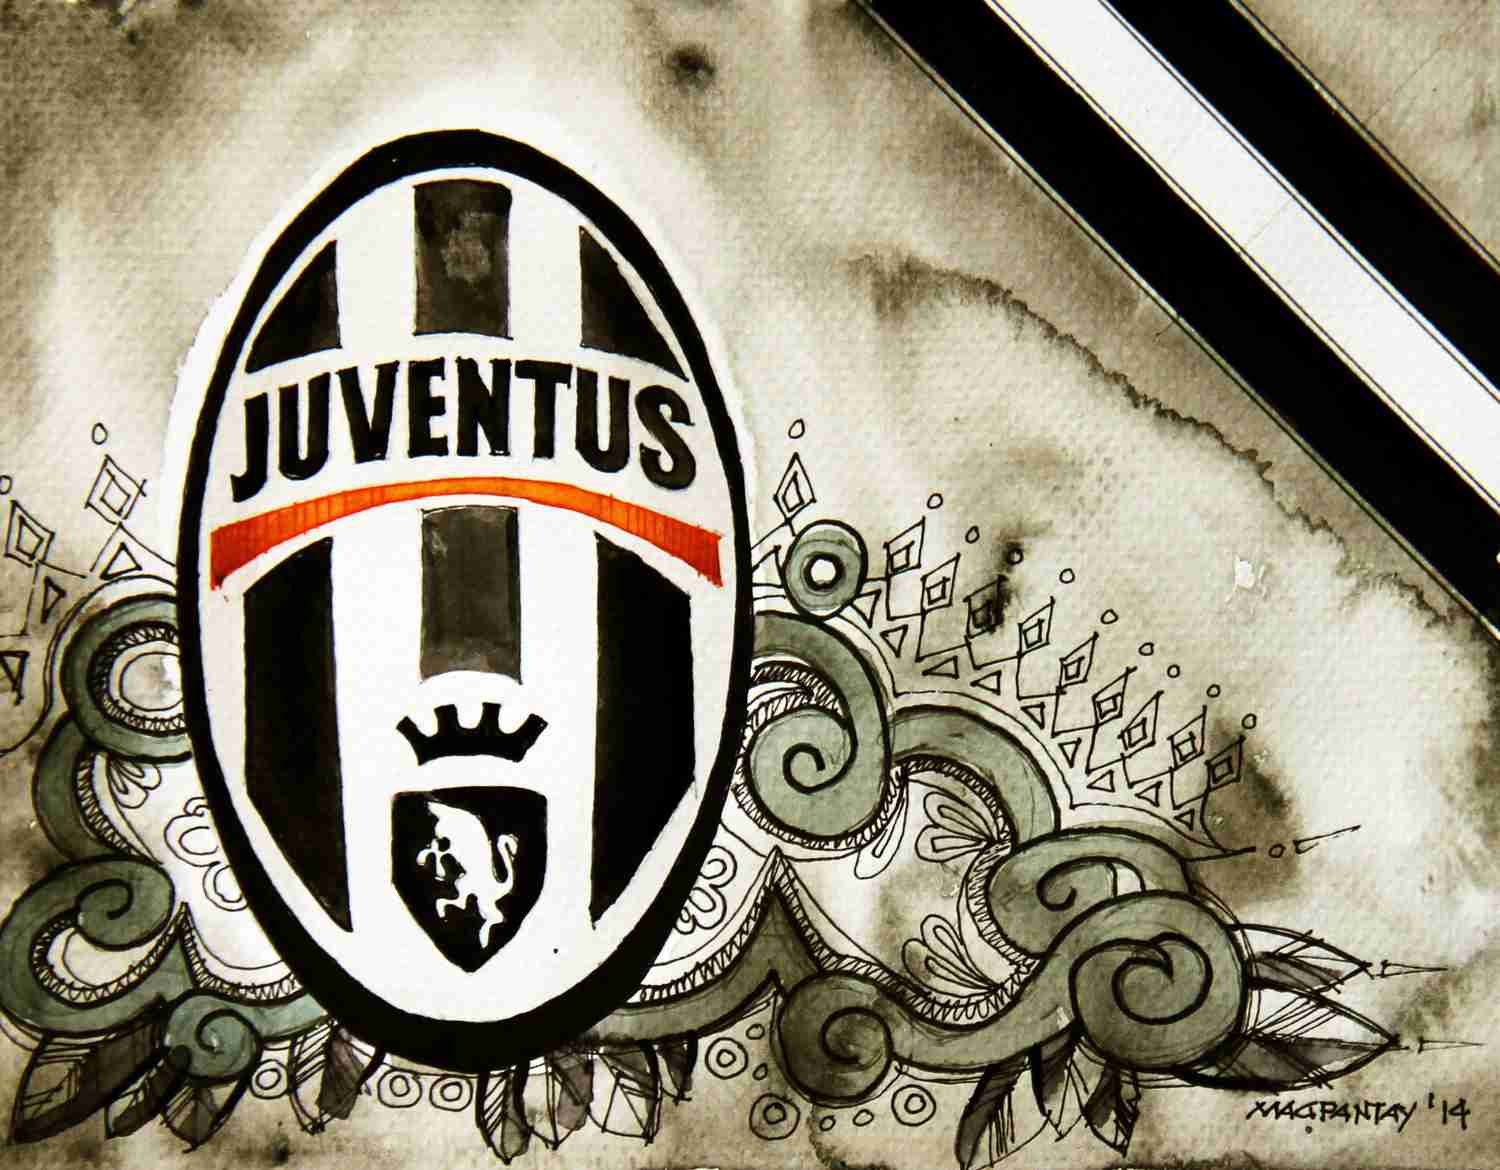 _Juventus Turin - Wappen mit Farben